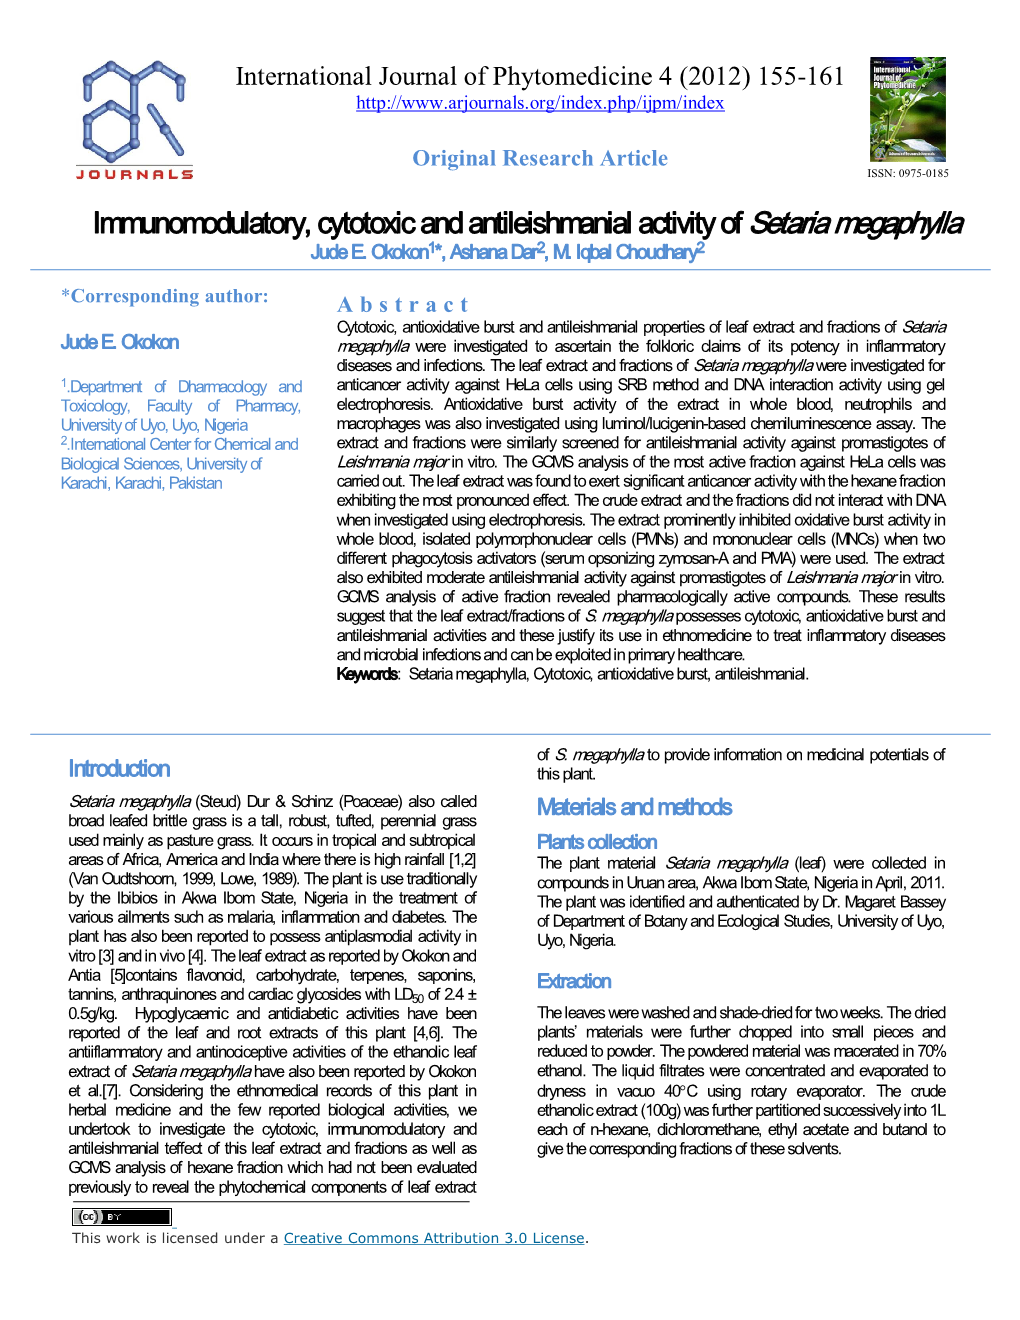 Immunomodulatory, Cytotoxic and Antileishmanial Activity of Setaria Megaphylla Jude E